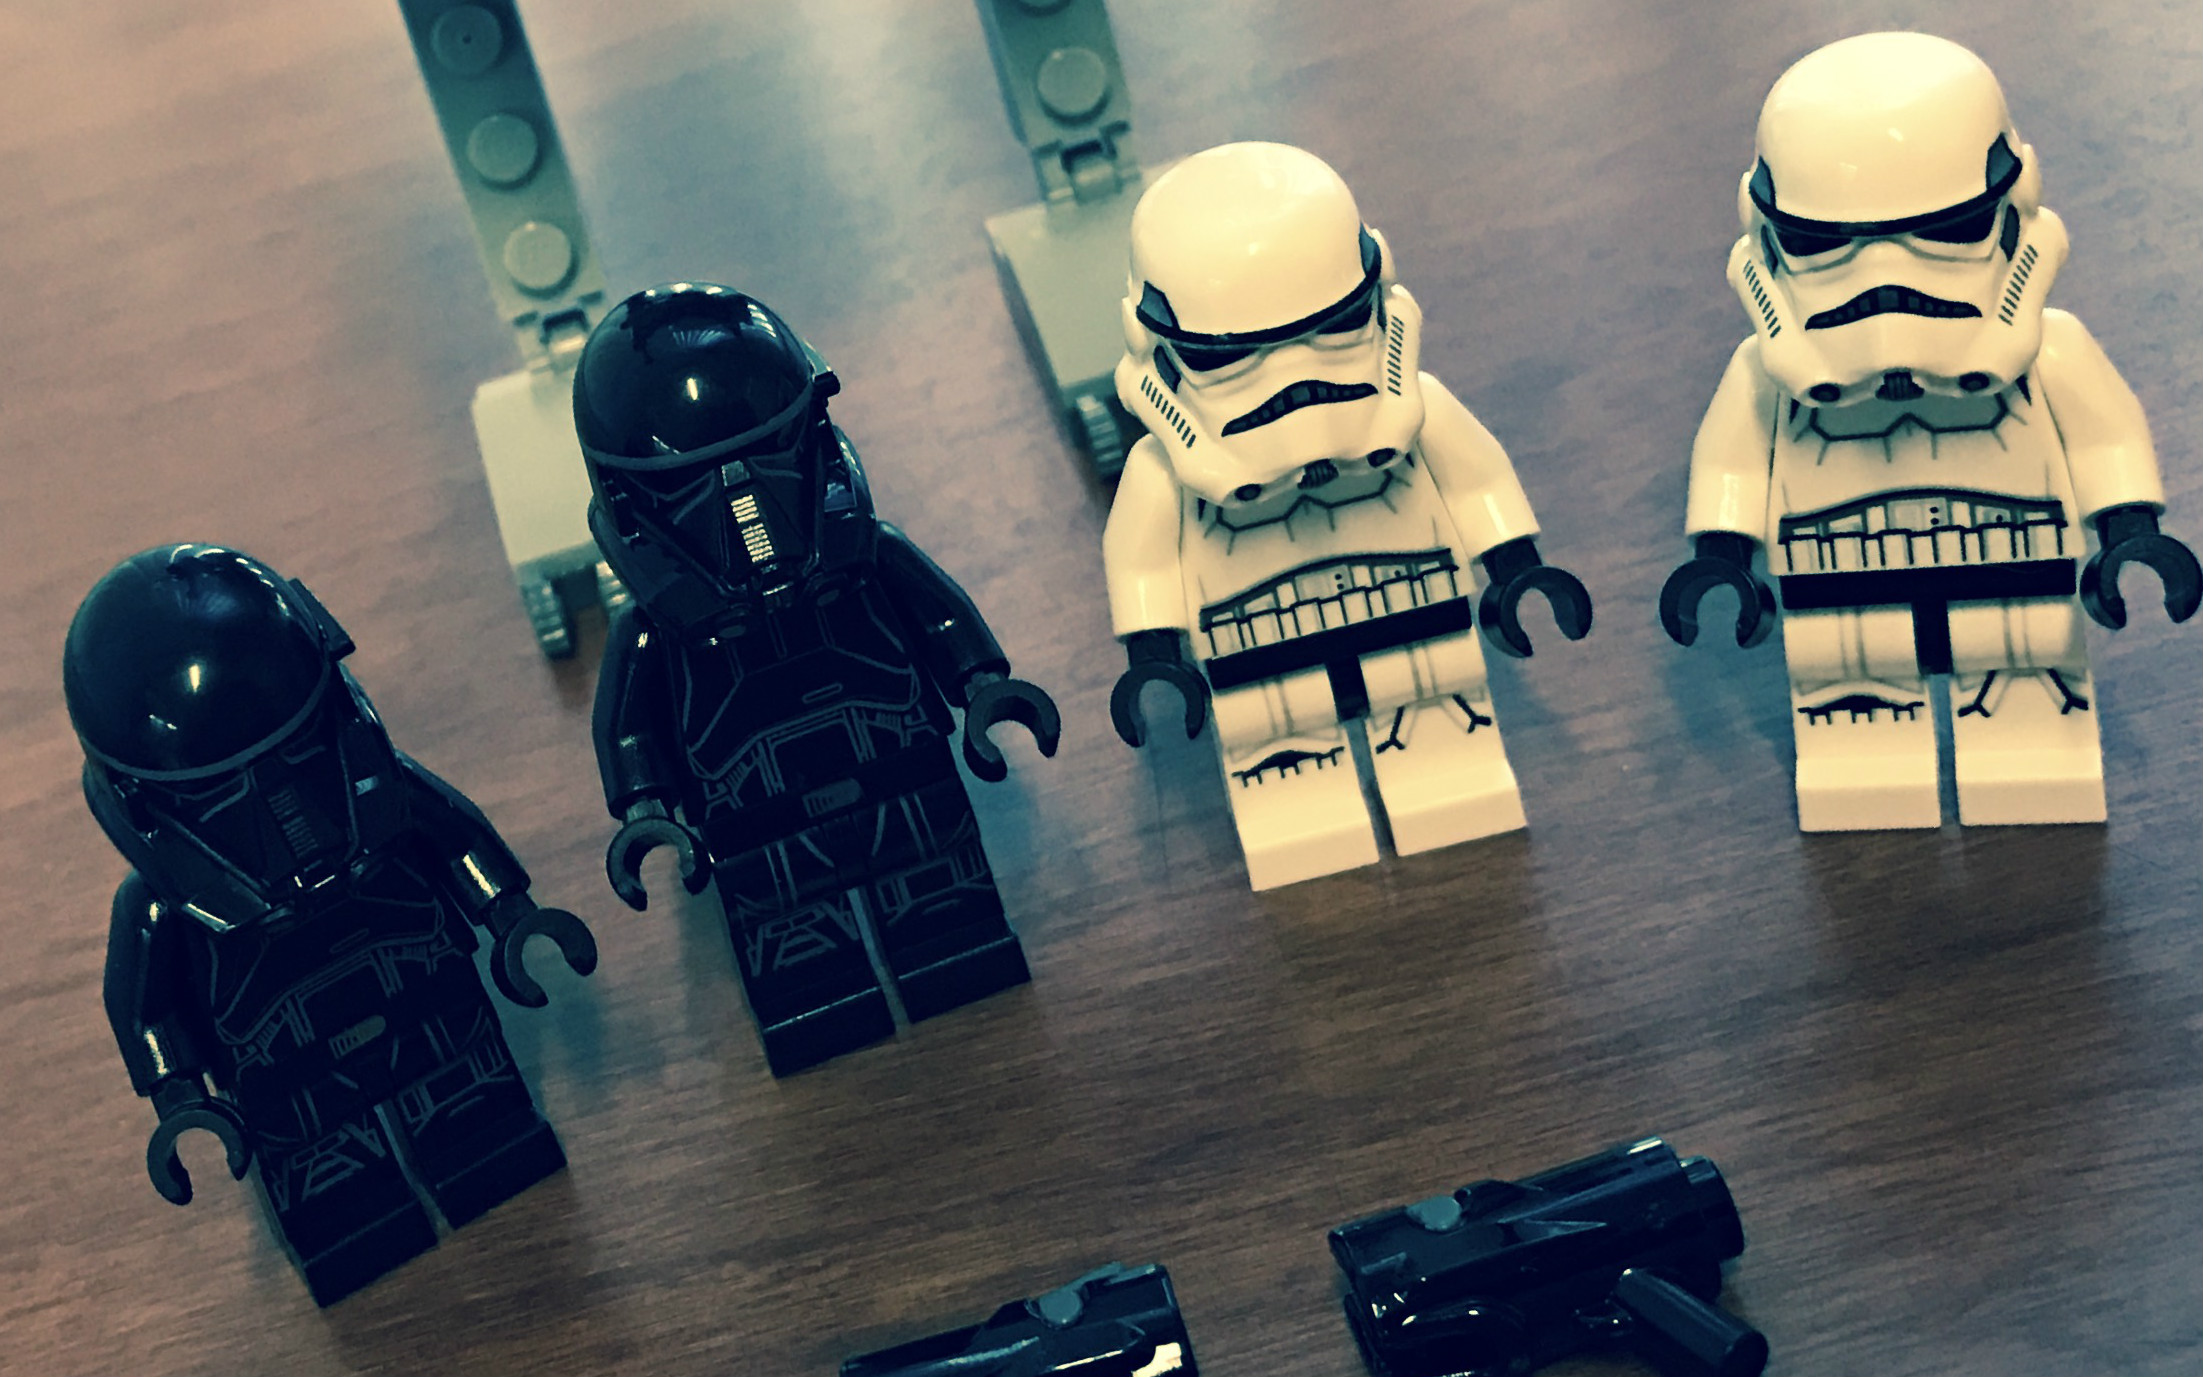 himmel Gentleman Berolige Star Wars LEGO 75165 Imperial Trooper - Review - All About The Bricks